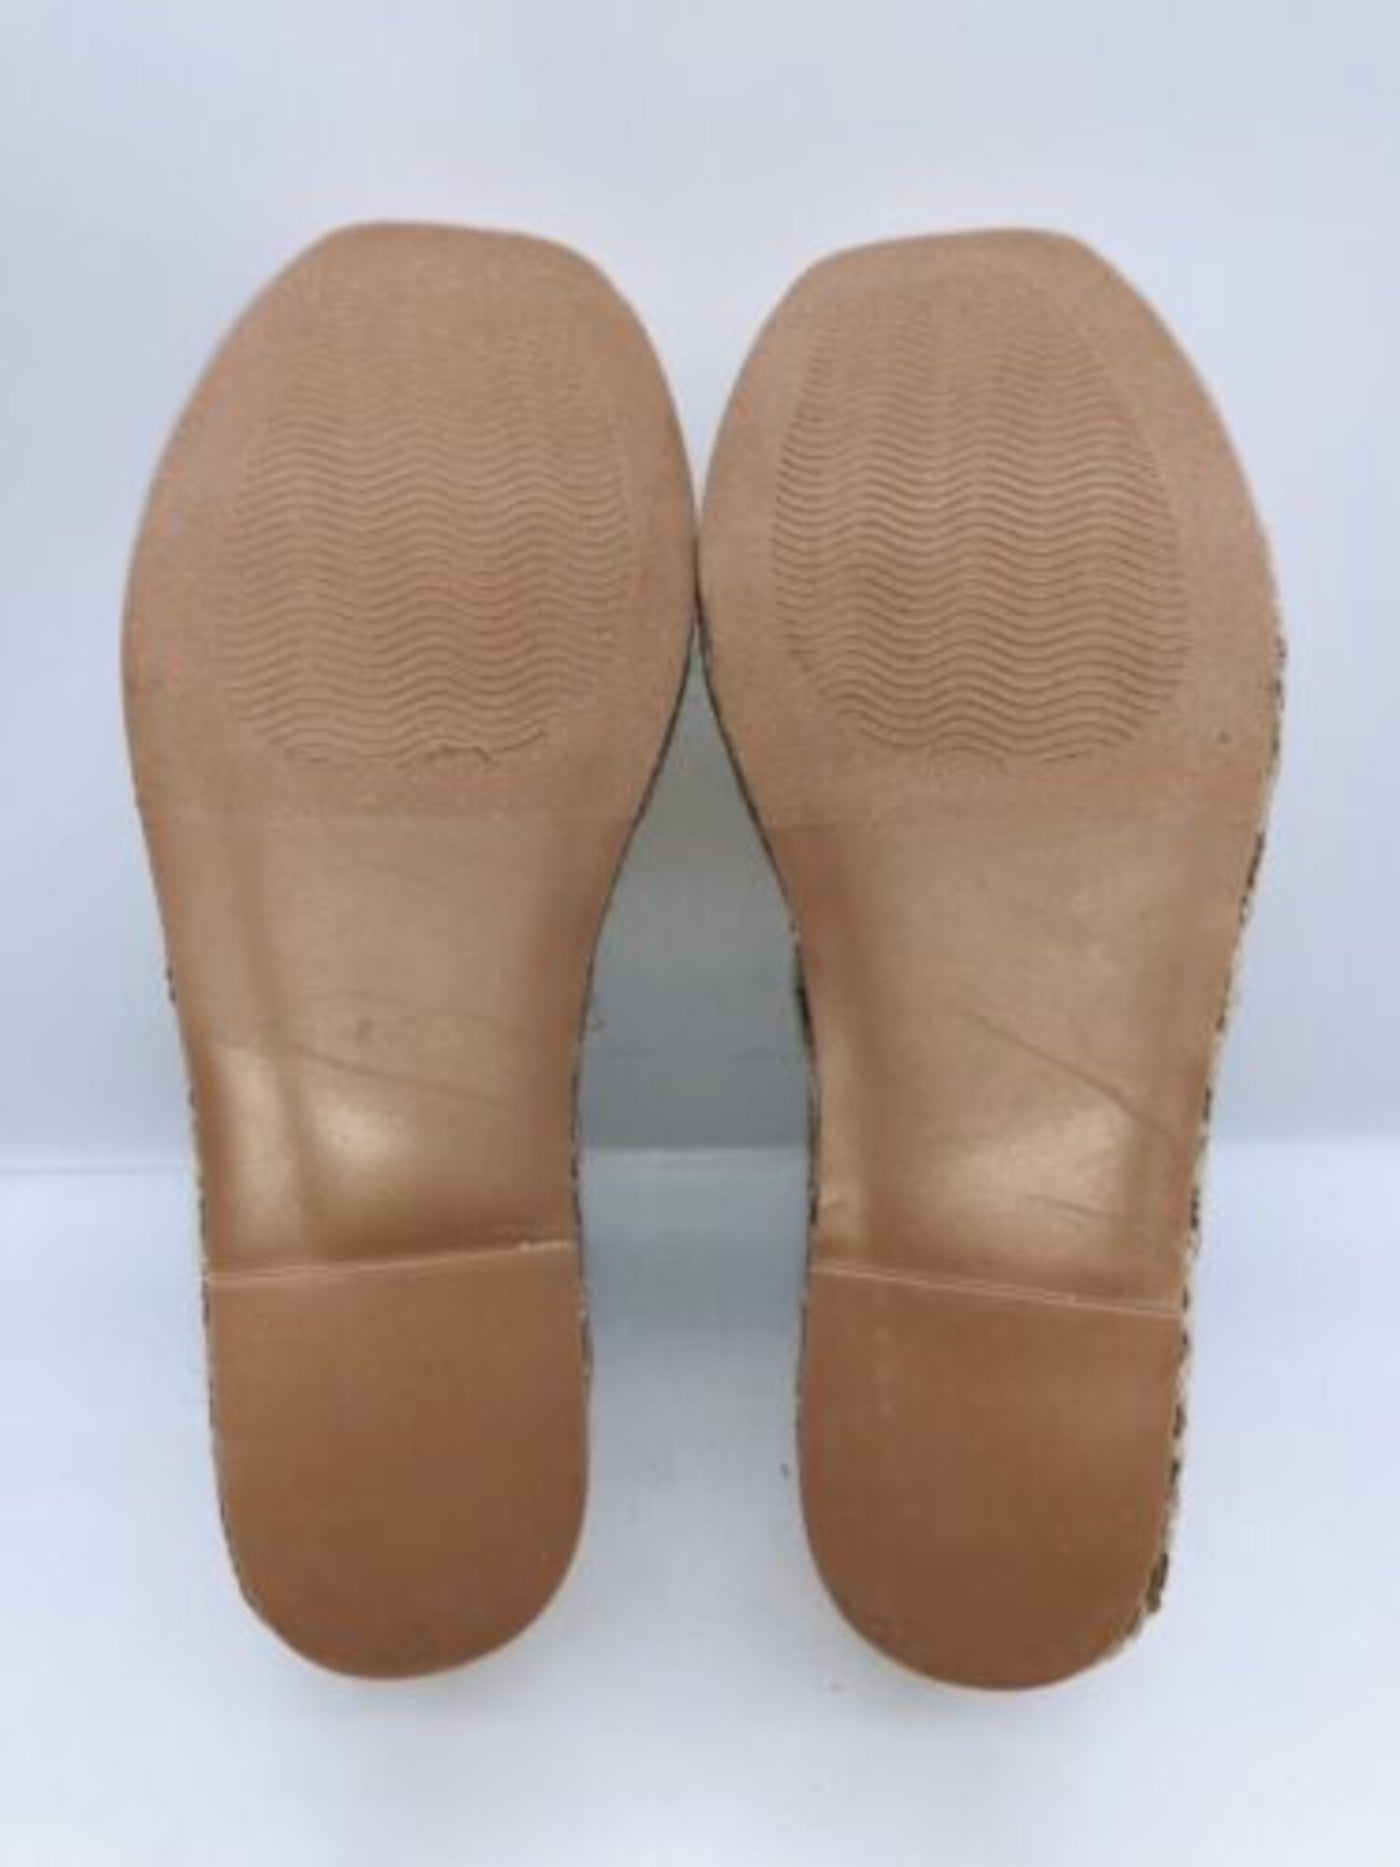 AQUA Womens Natural Beige 2" Platform Braided Jute Fringed Padded Jacy Square Toe Wedge Slide Slide Sandals Shoes M